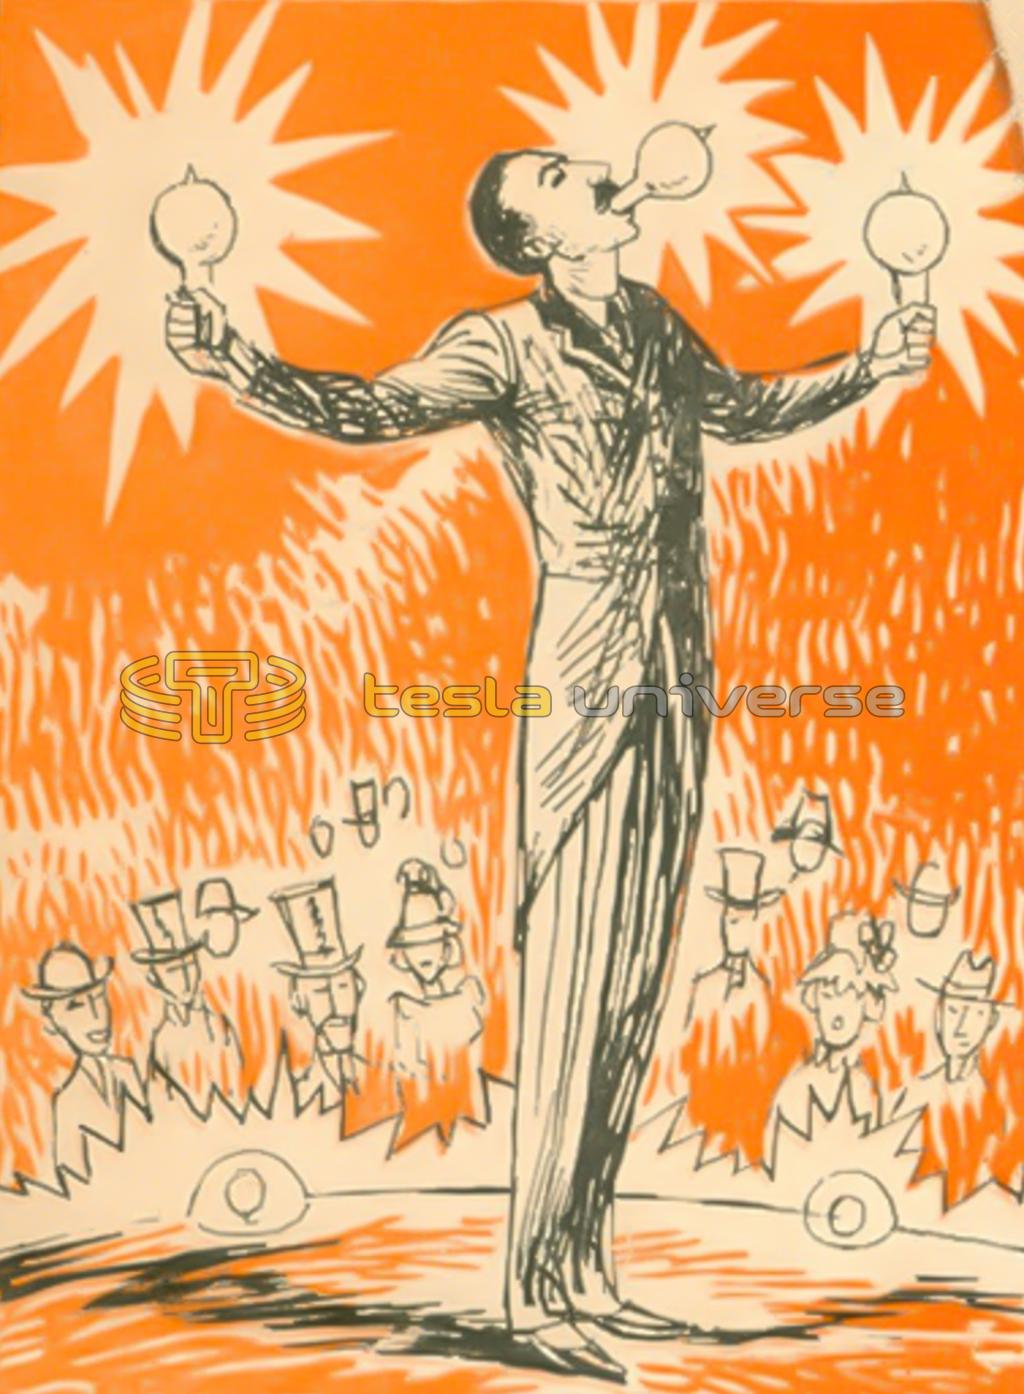 Illustration of Nikola Tesla mystifying crowds at the 1893 World's Fair